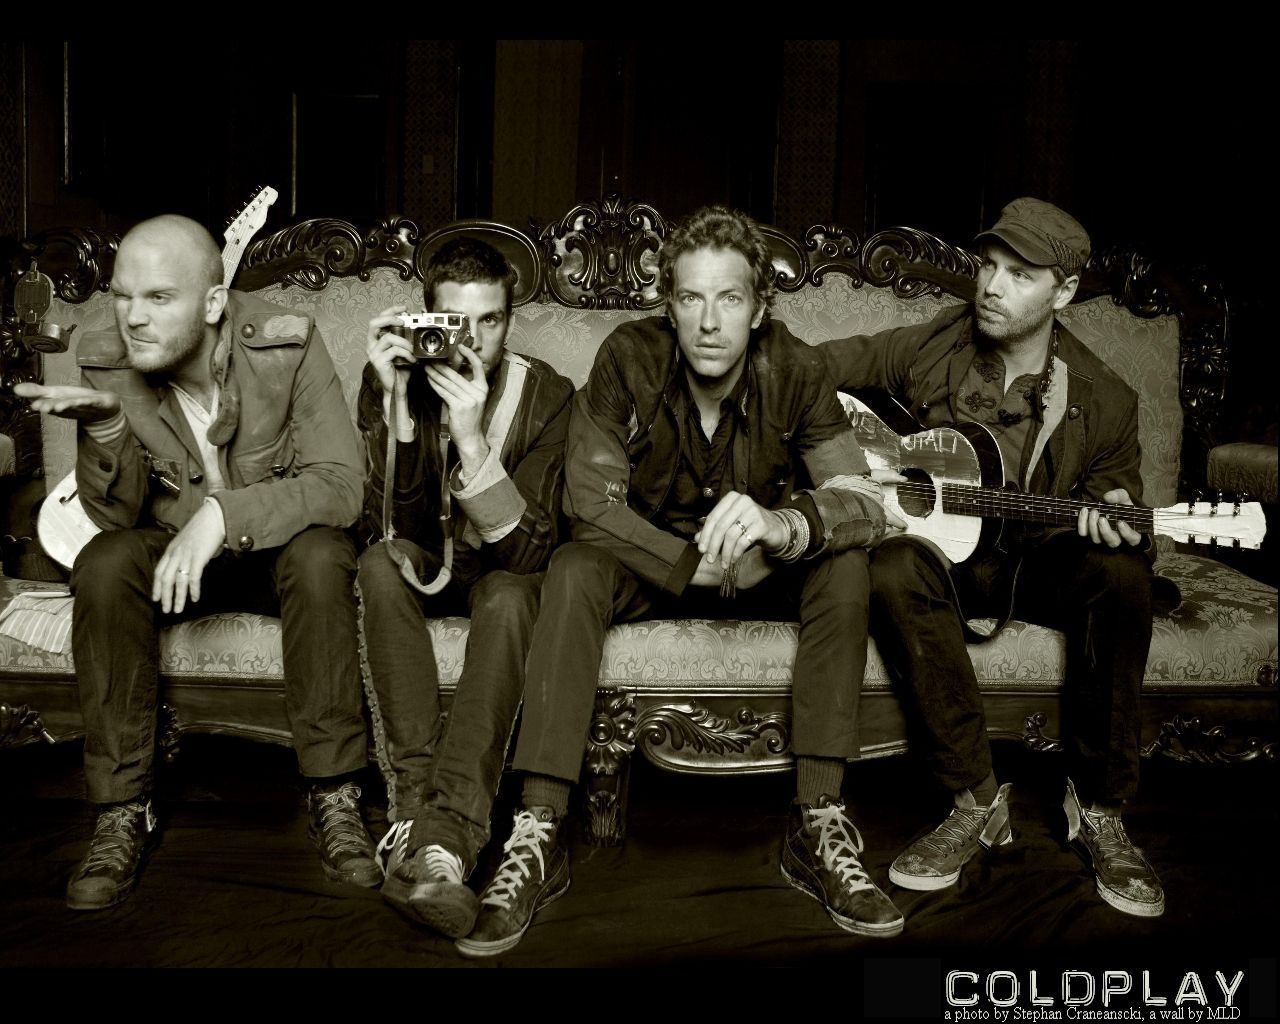 Coldplay photo, pics, wallpaper - photo #286930